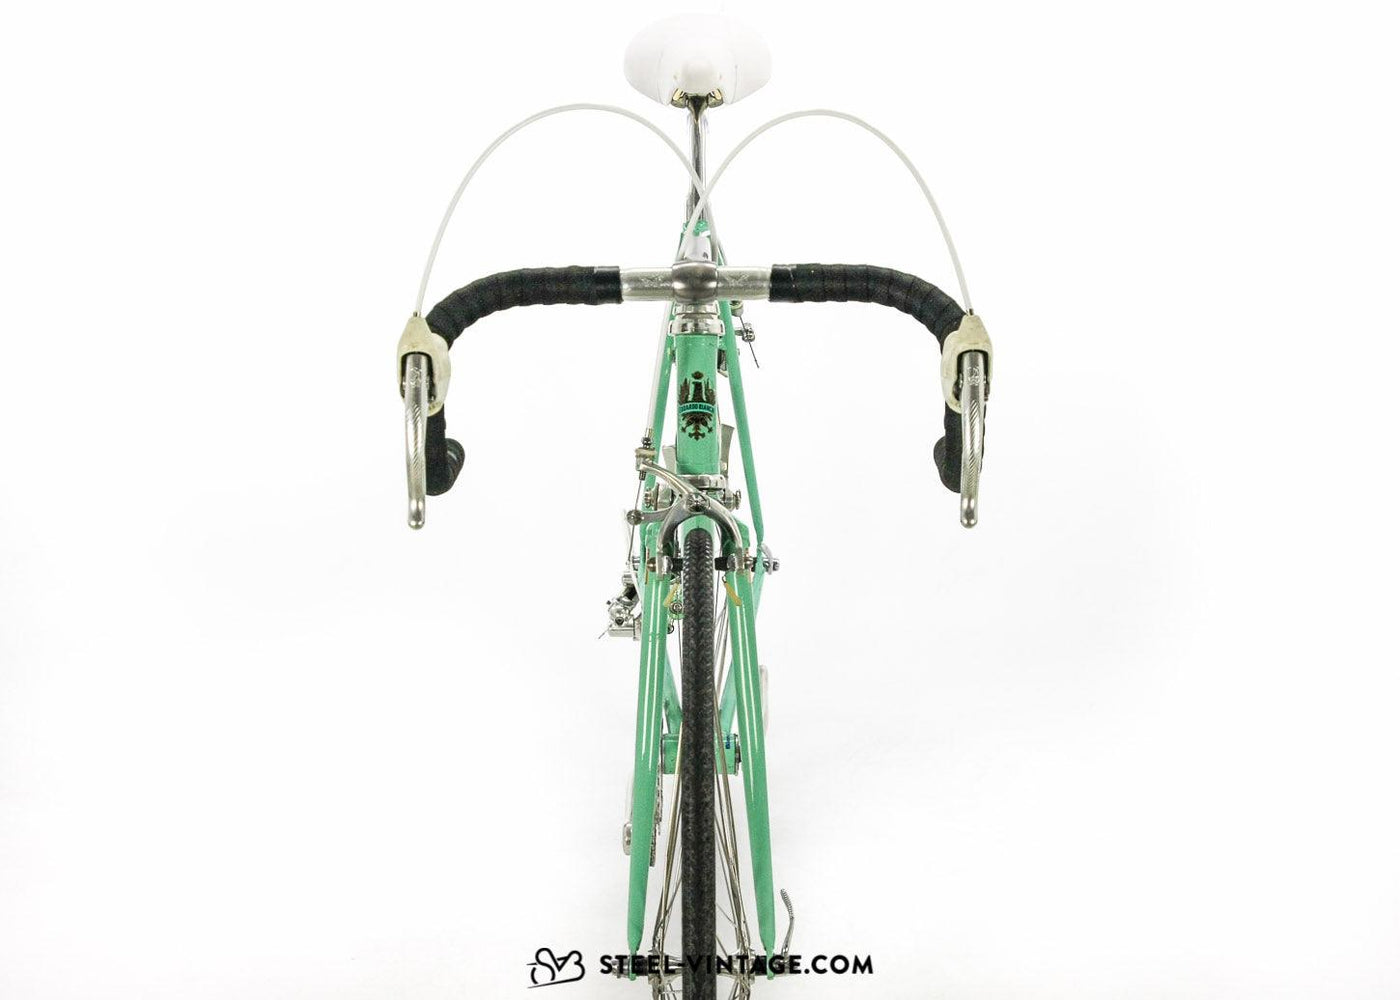 Bianchi Superleggera Classic Racing Bike - Steel Vintage Bikes